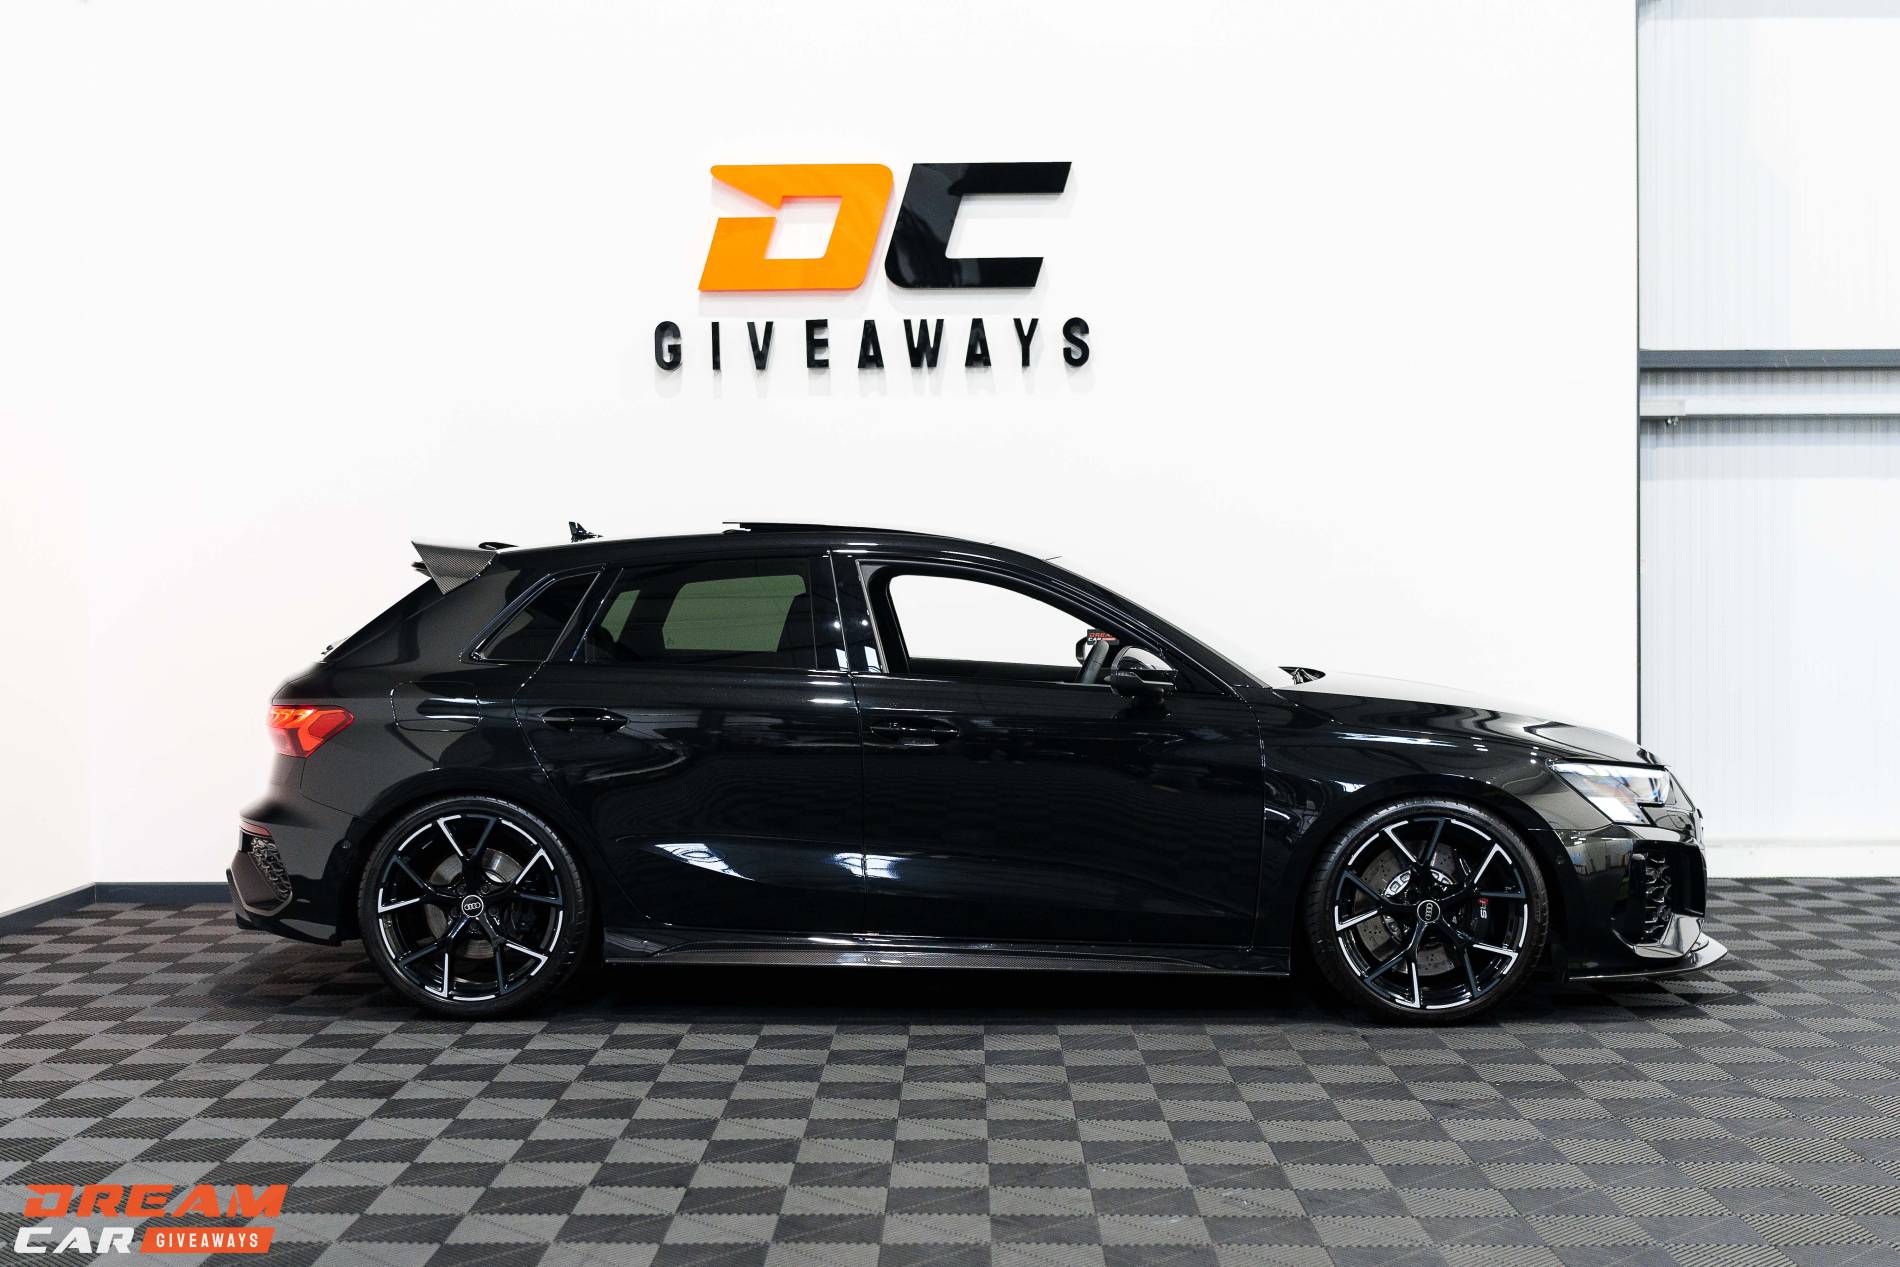 Win this Mclaren 720S & Audi RS3 Vorsprung & £10,000 or £165,000 Tax Free